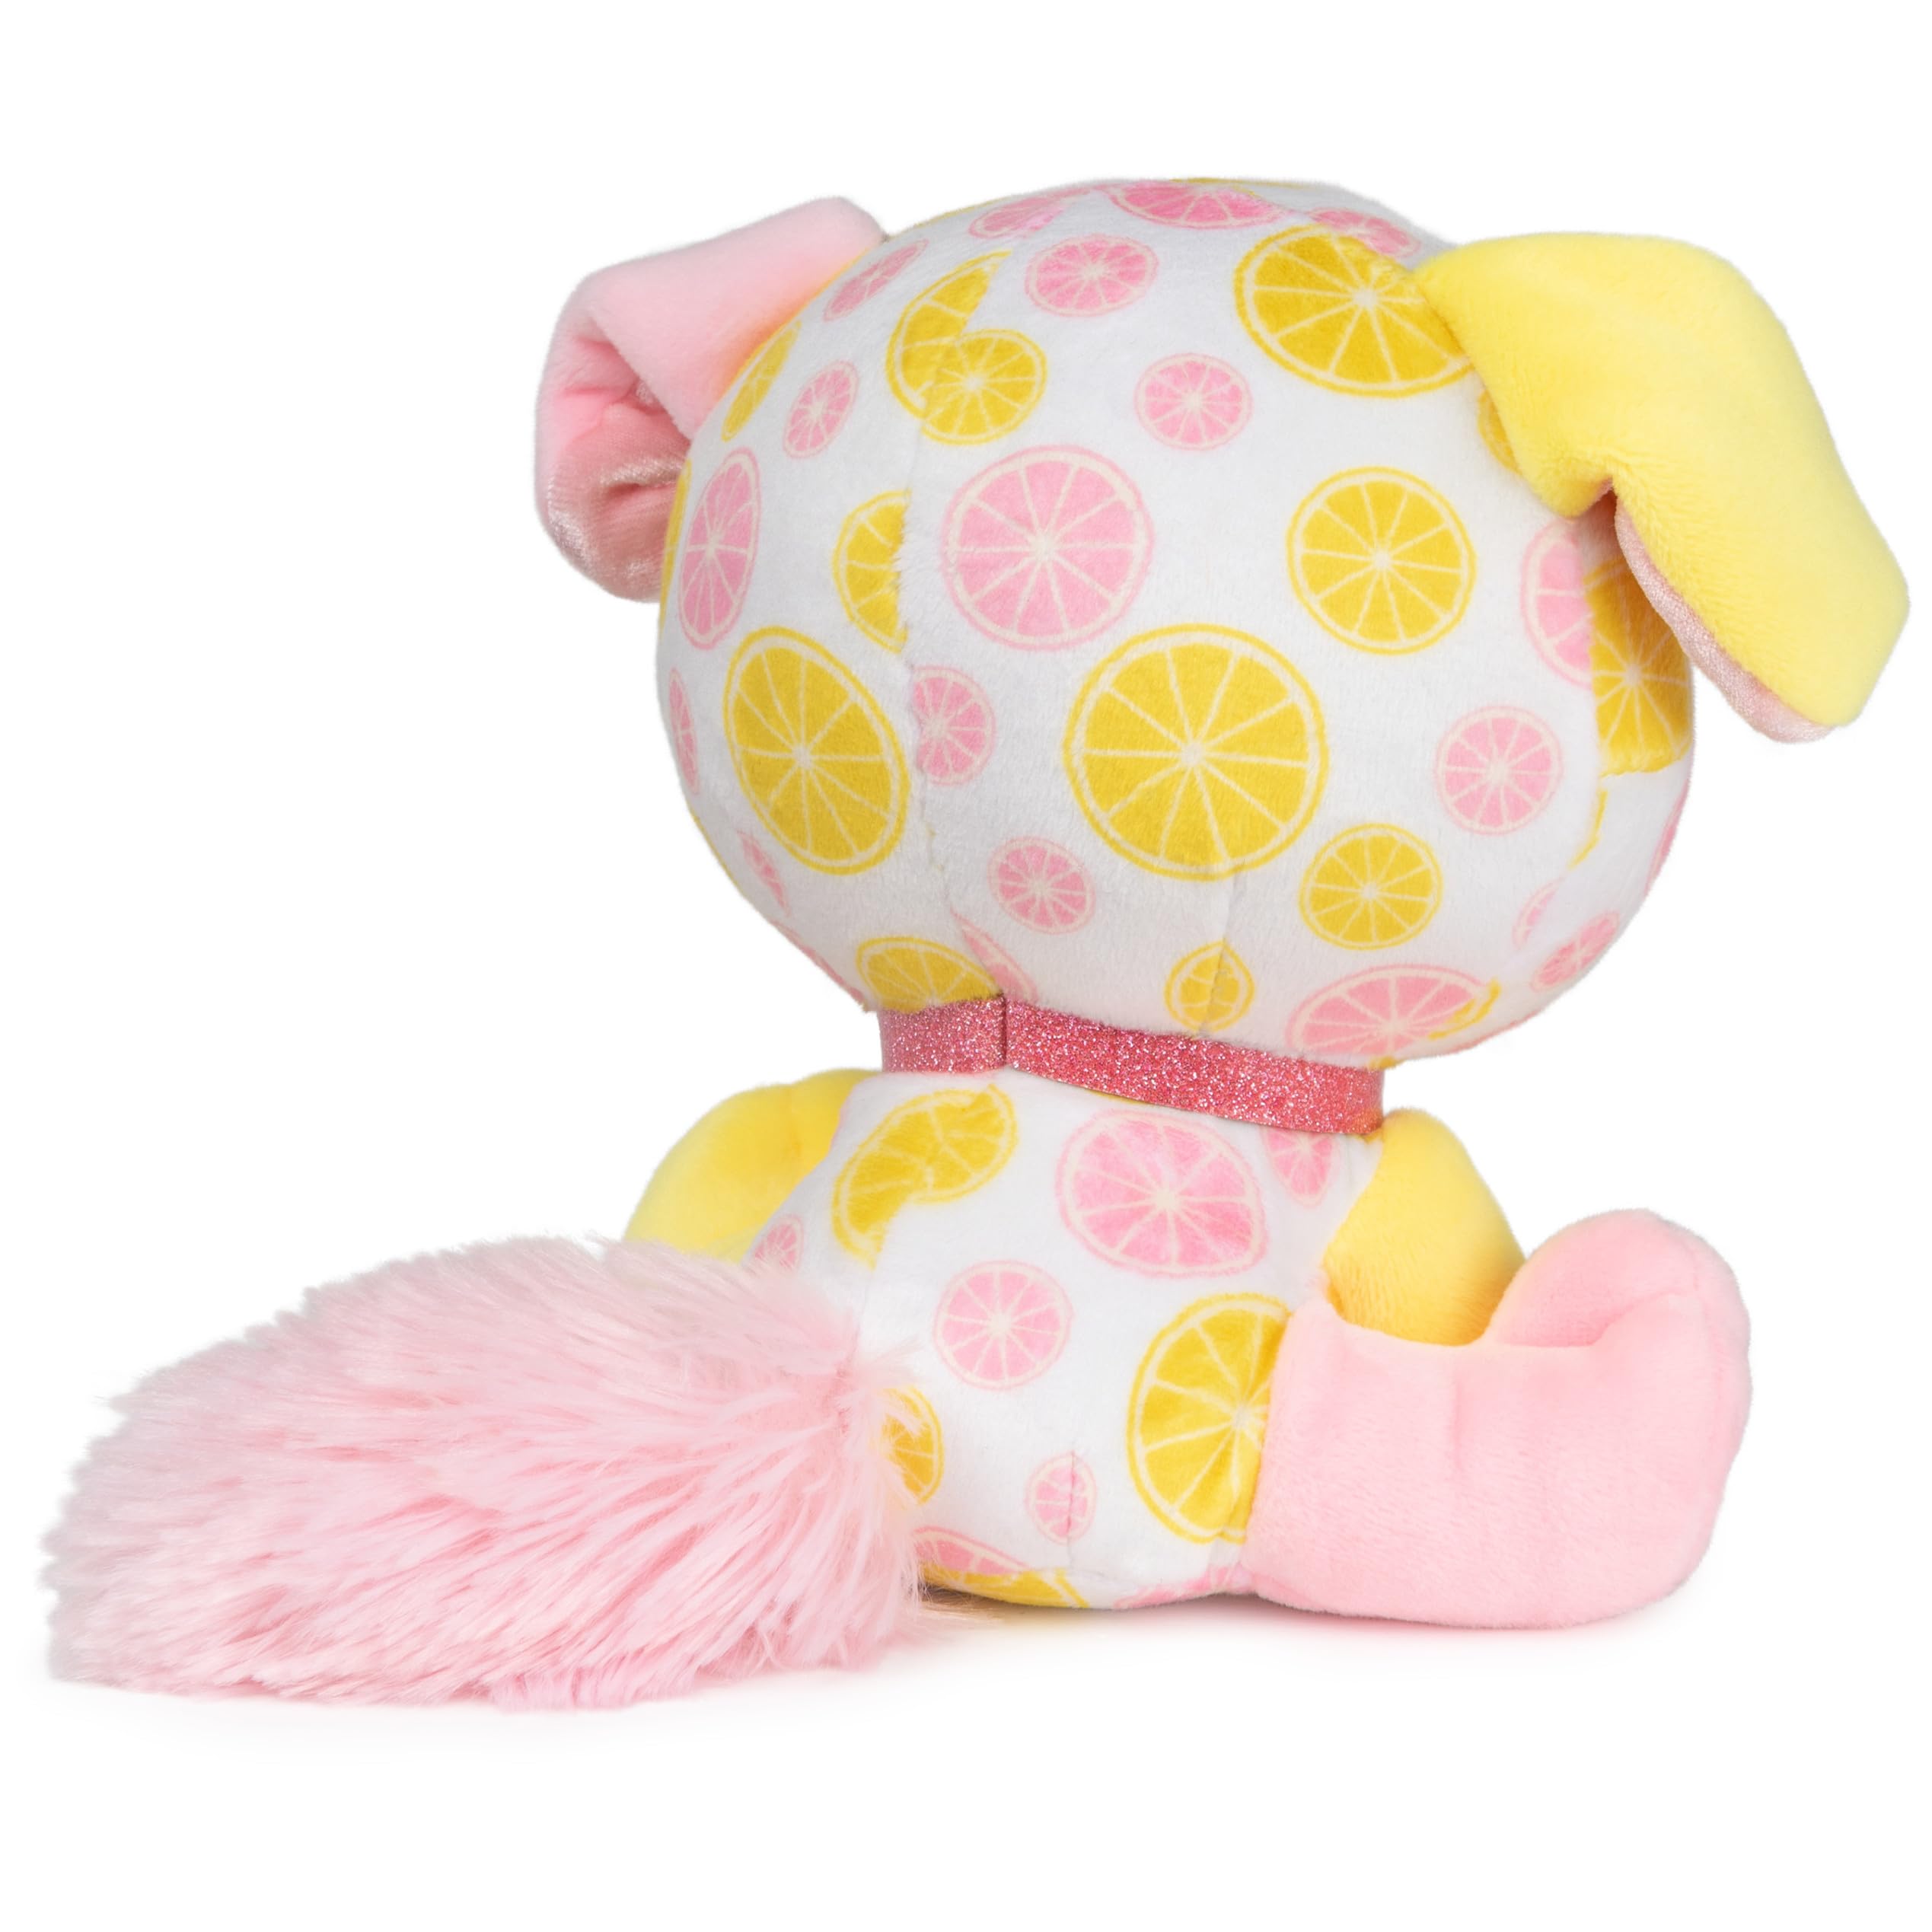 GUND P.Lushes Pets Juicy Jam Collection, Capri Limone Puppy Stuffed Animal, Pink/Yellow, 6”